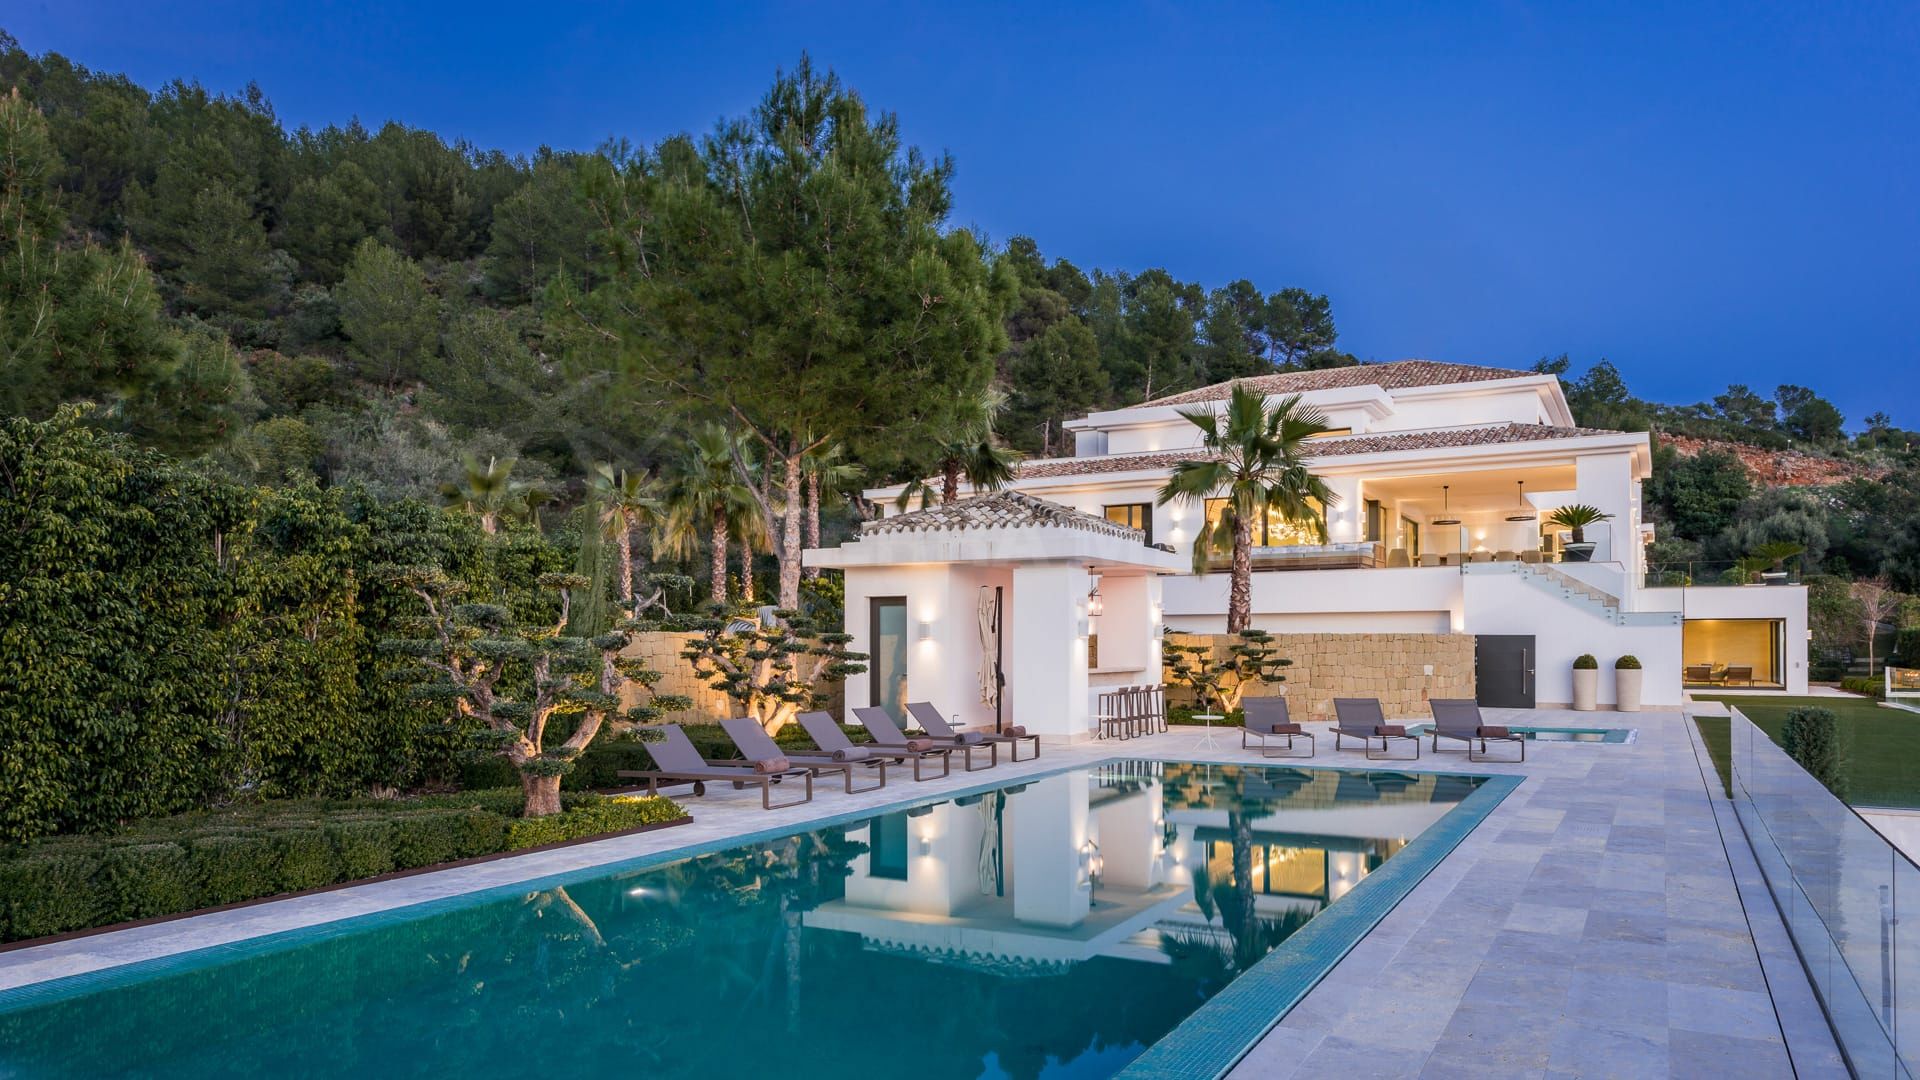 Villa Camoján: living the high life at Marbella’s best address